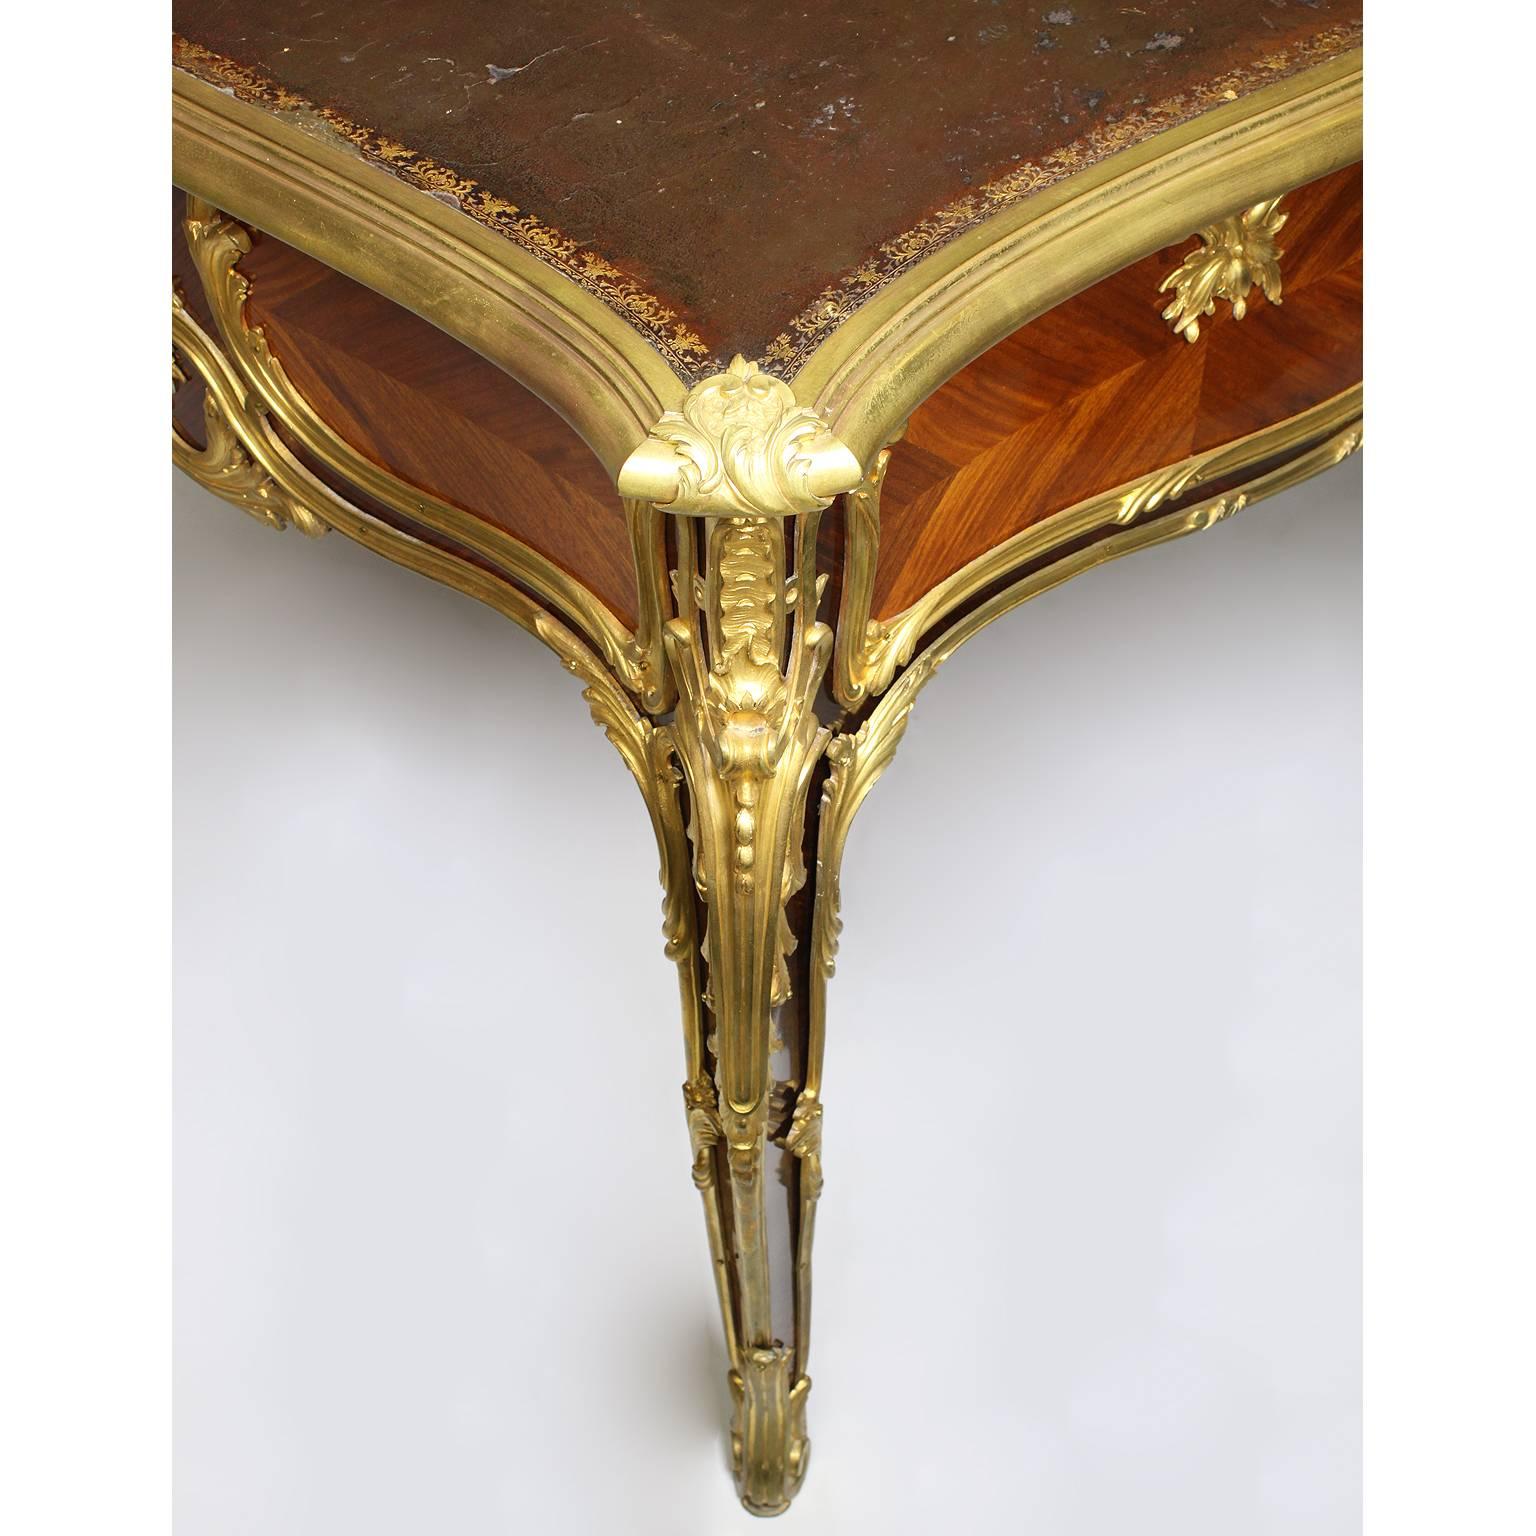 French 19th Century Louis XV Style Kingwood Gilt-Bronze Mounted Bureau Plat Desk For Sale 3